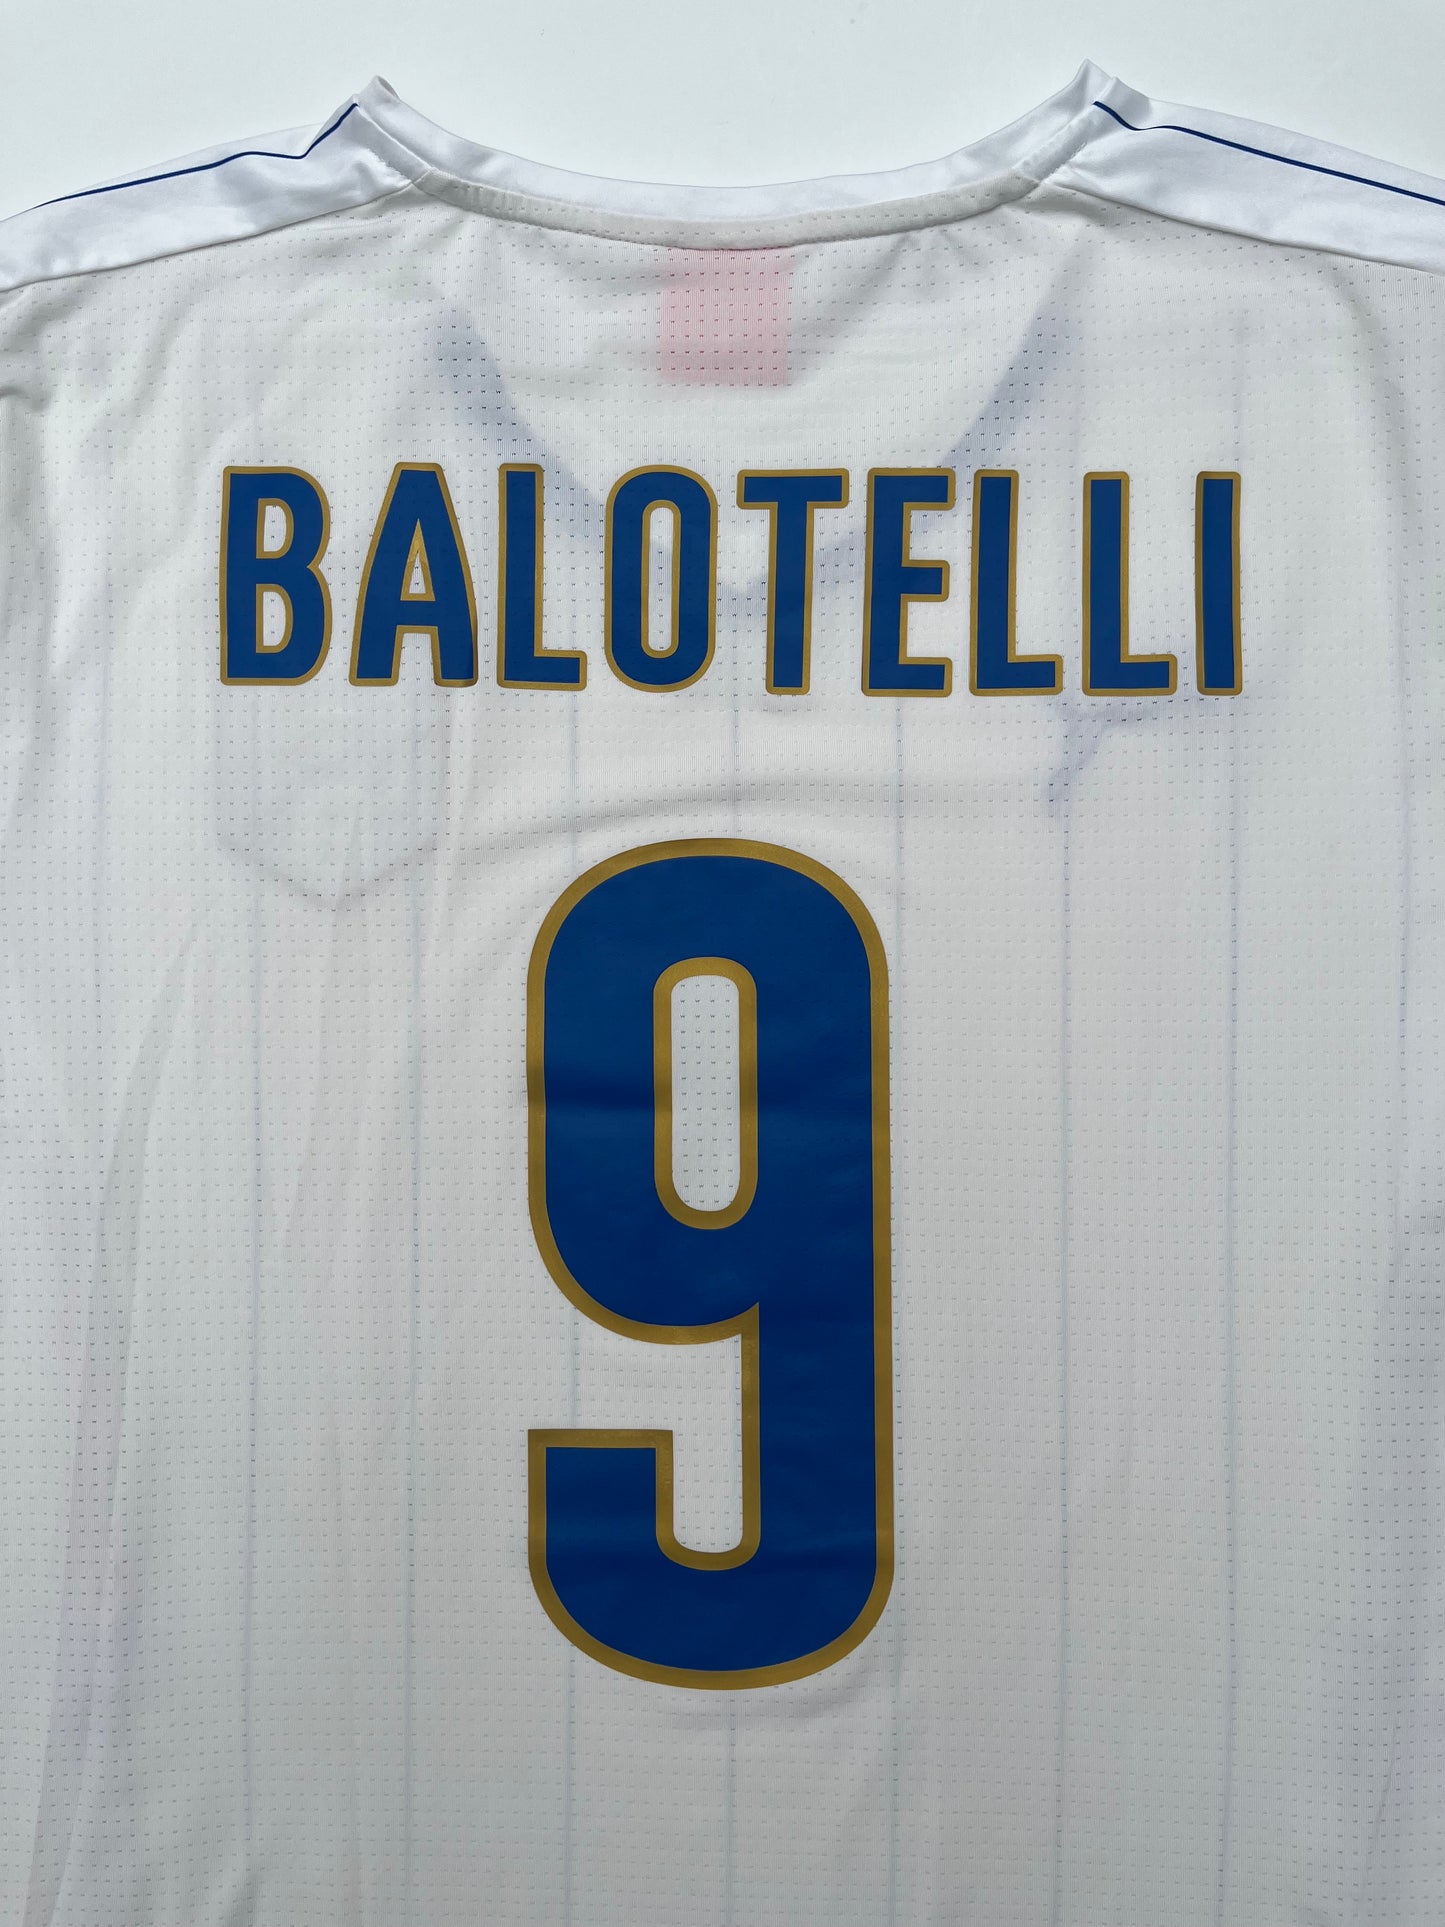 Jersey Italia Visita 2014 2016 Mario Balotelli (XL)